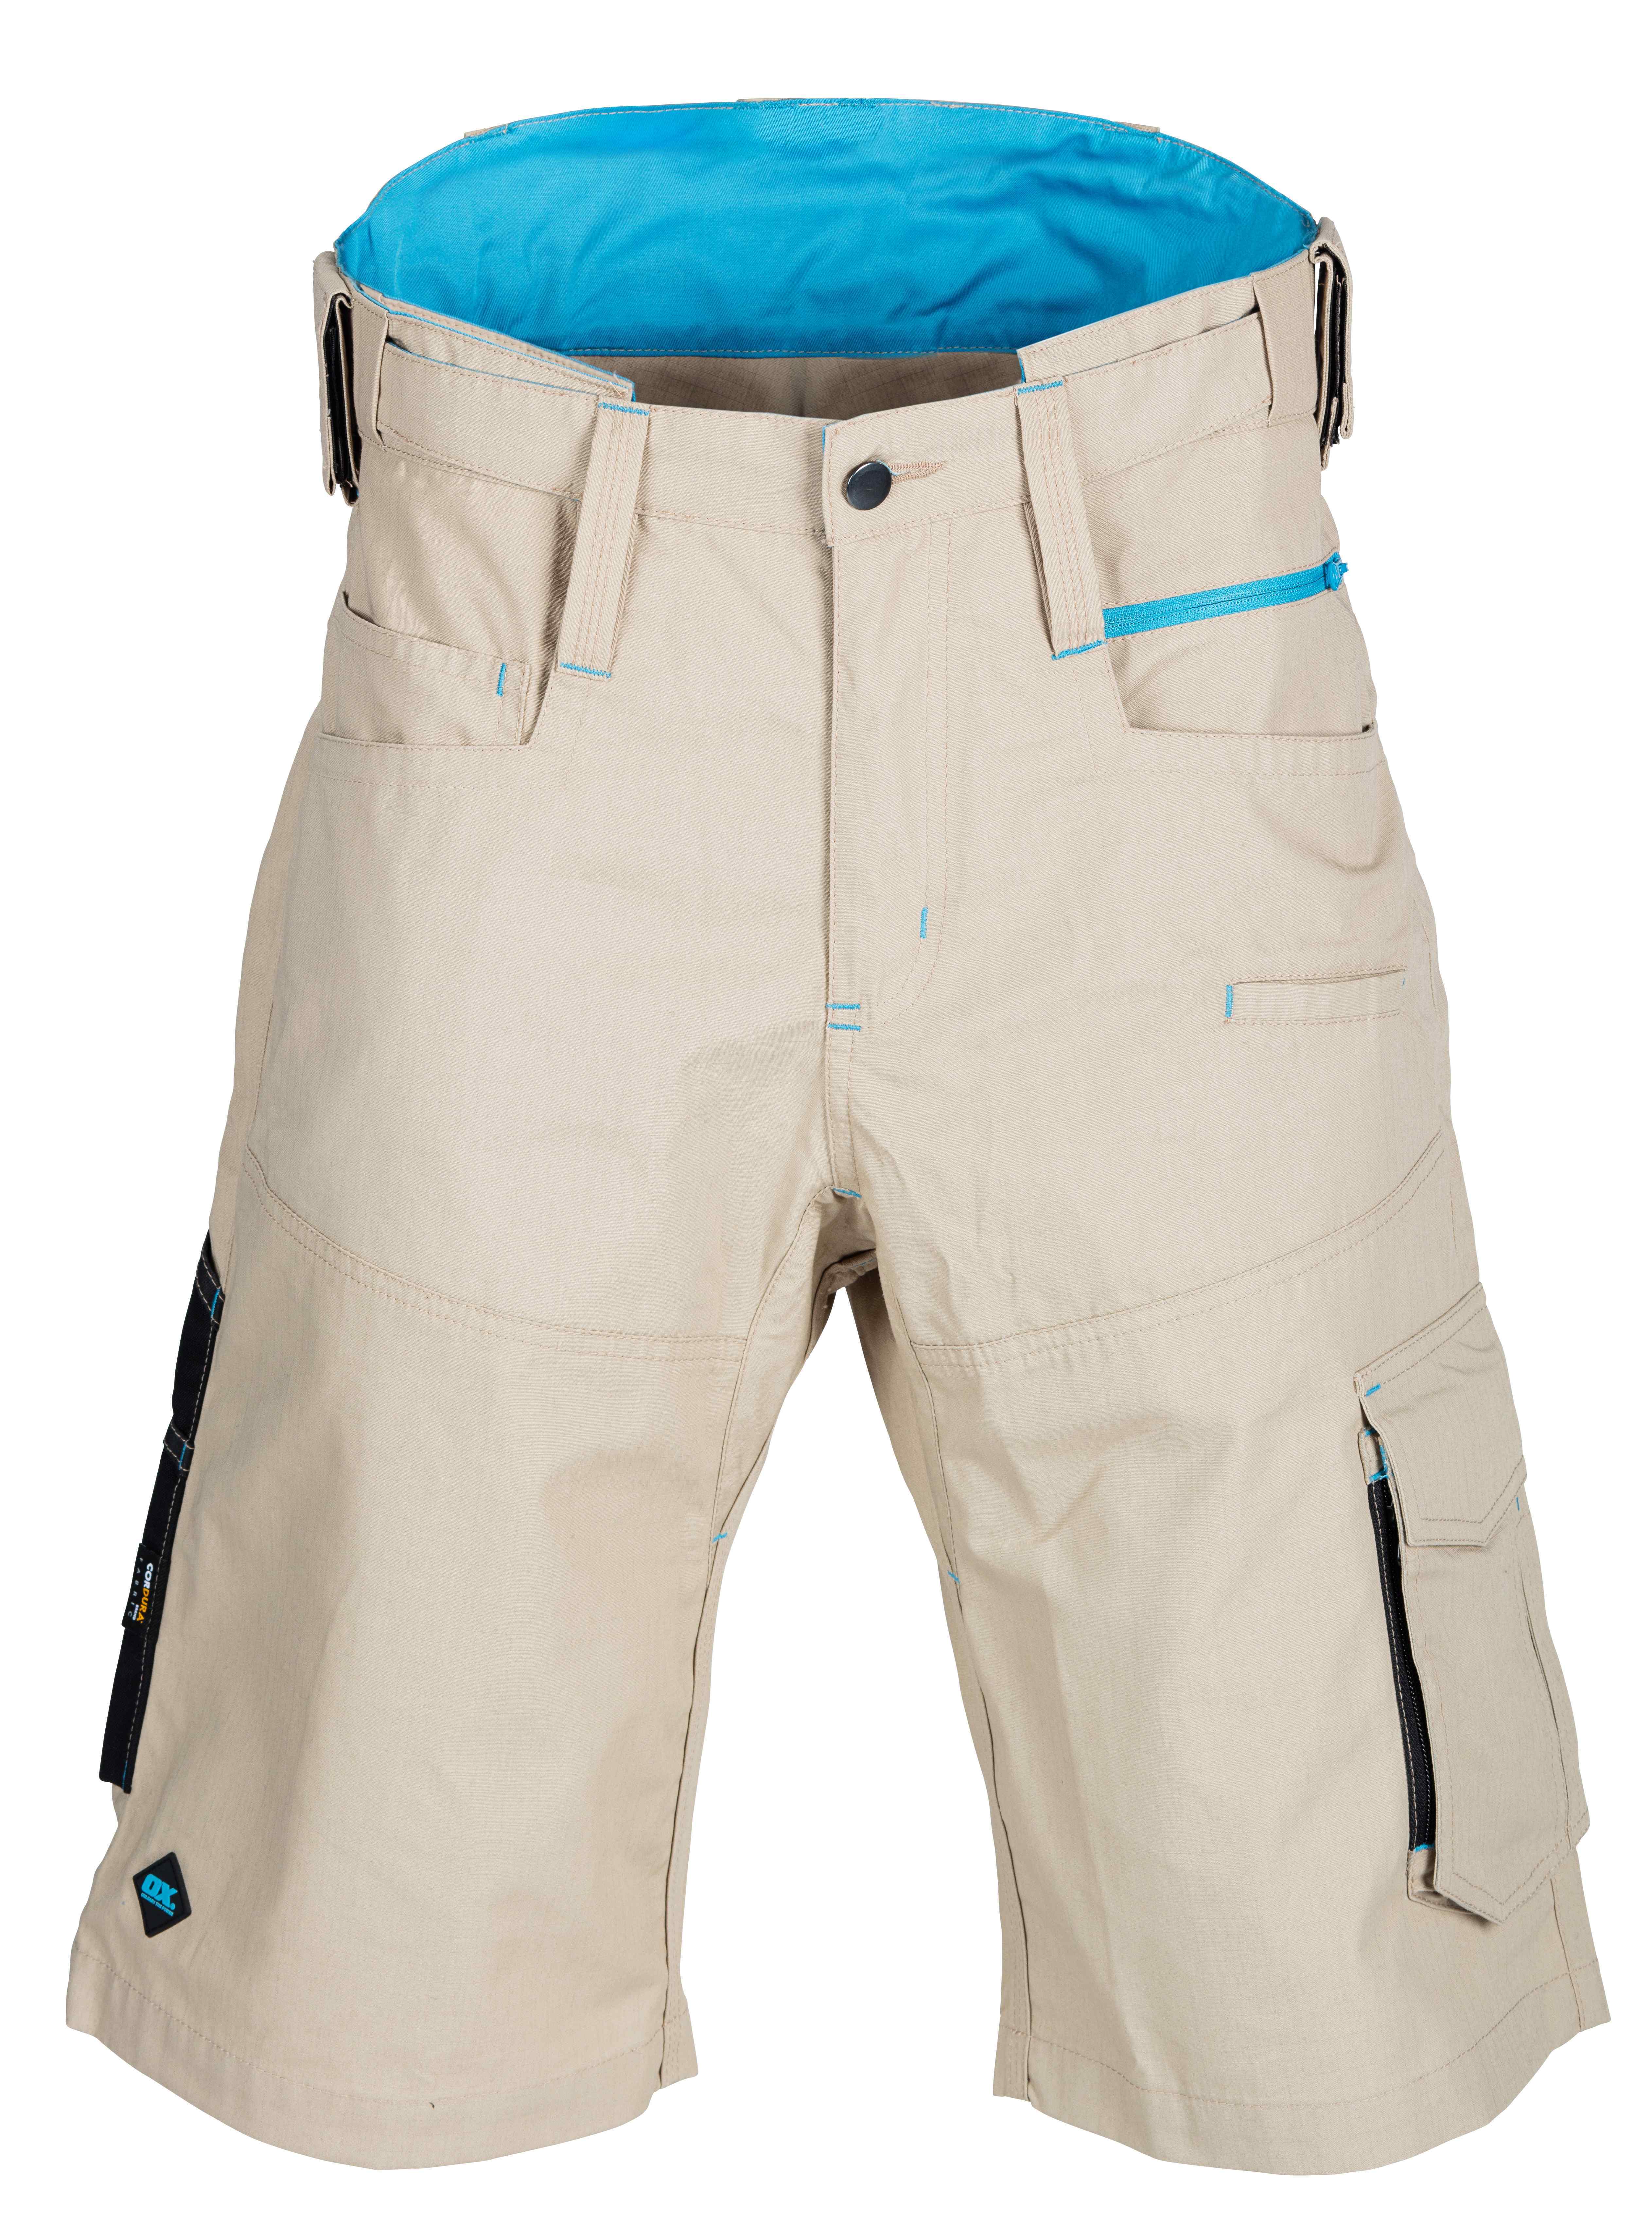 OX Ripstop Shorts - Beige - 38 - Reg